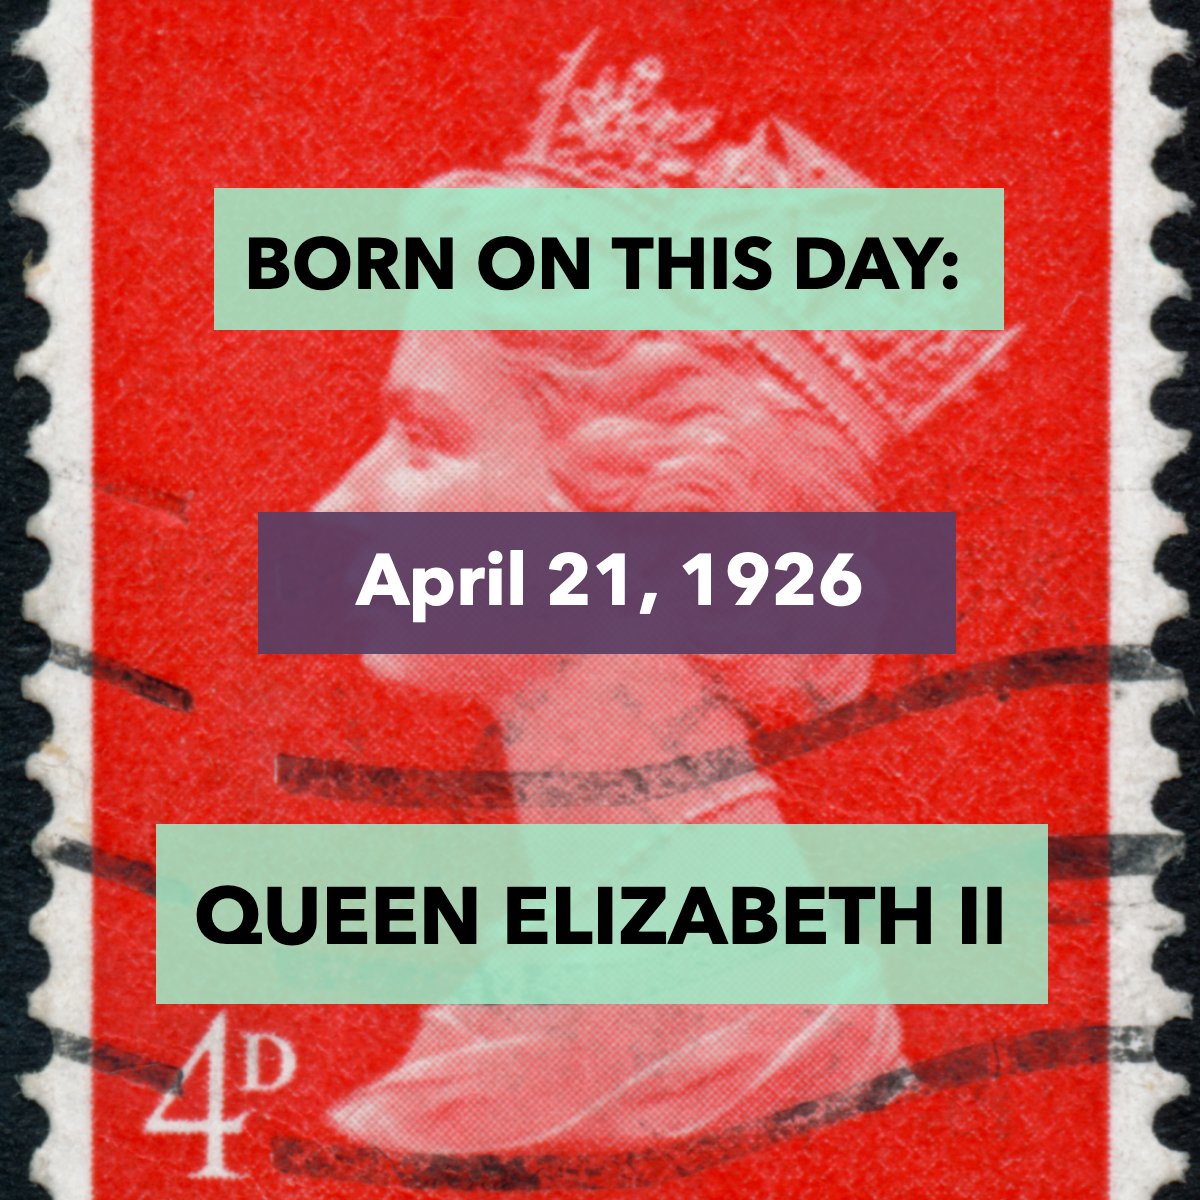 Today marks the birthday of Queen Elizabeth II

She was Britain's longest-reigning monarch

#queen👑  #borntoday #bornonthisday #famousbirthdays 
 #GordonDey #PensacolaHomes #LuxuryHomes #NatureTrail #PensacolaBeach #PerdidoKey #DowntownPensacola #HomesForSale #EXP